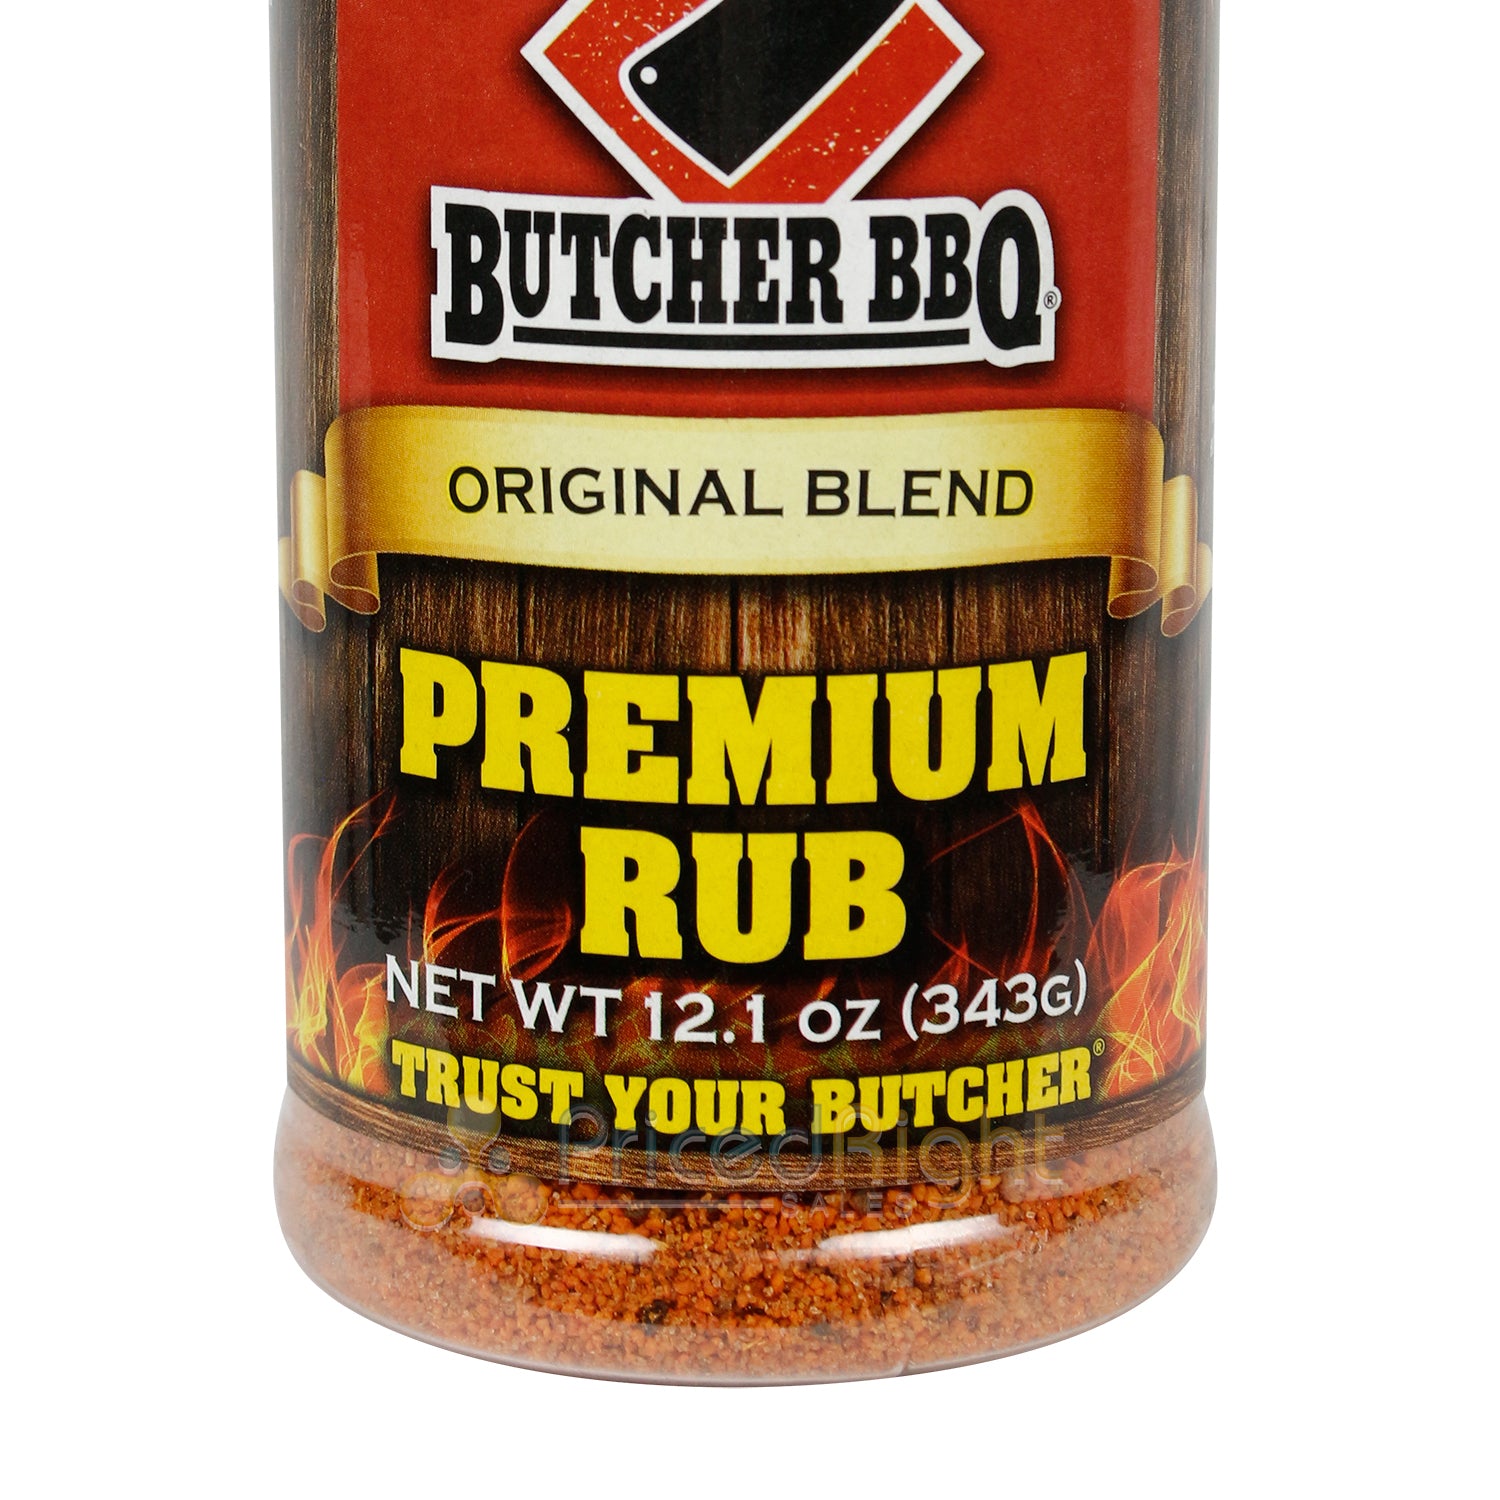 Butcher BBQ Premium Rub Original Blend 12.1 Oz BBQ Dry Rub Gluten Free No MSG